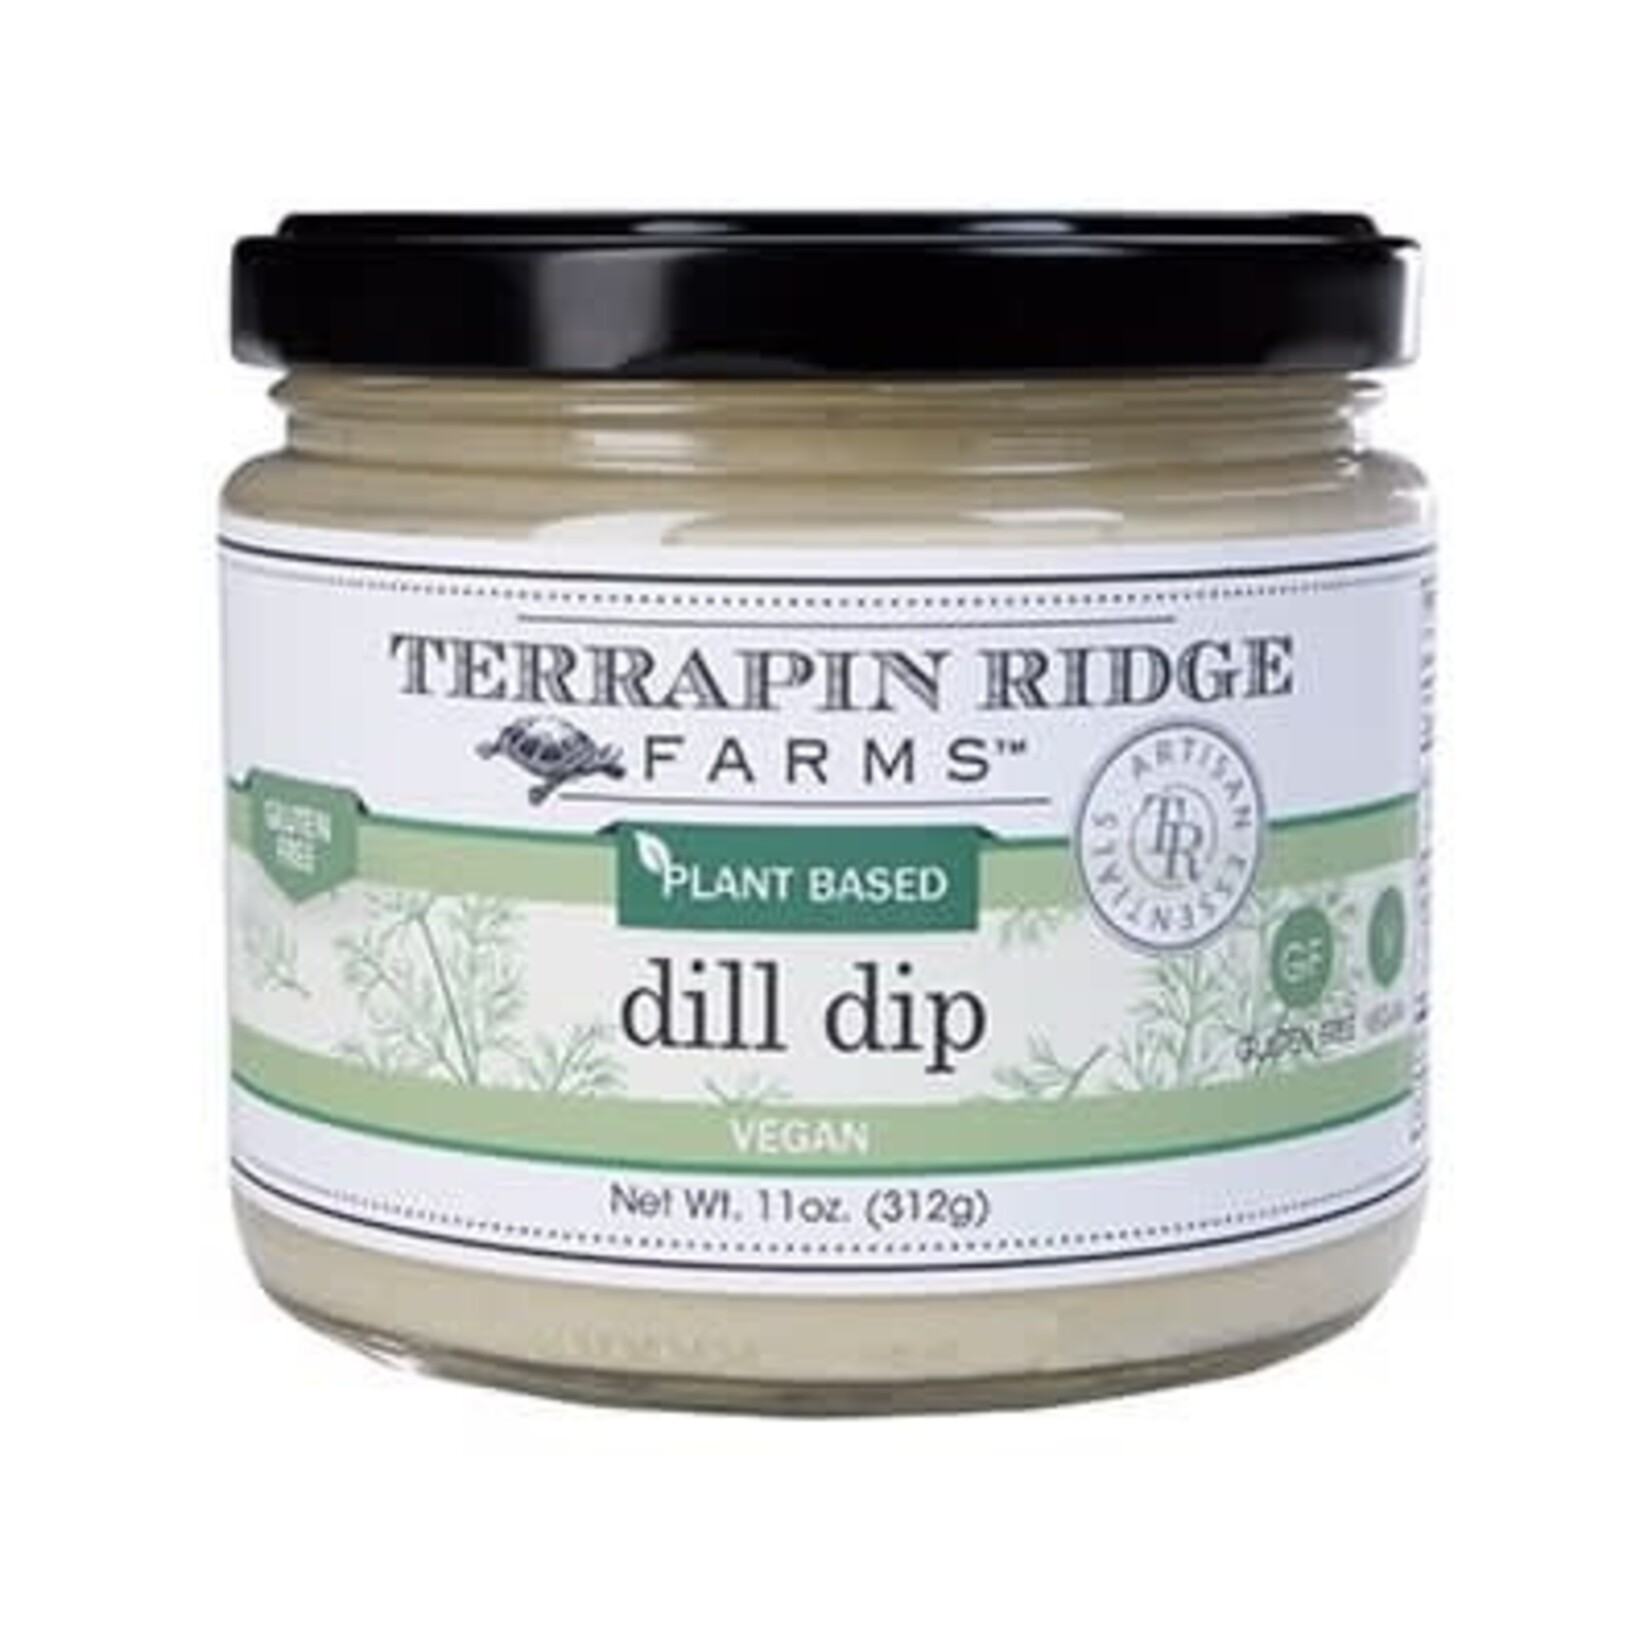 Terrapin Ridge Farms Dill Dip 11 oz.  - Plant Based